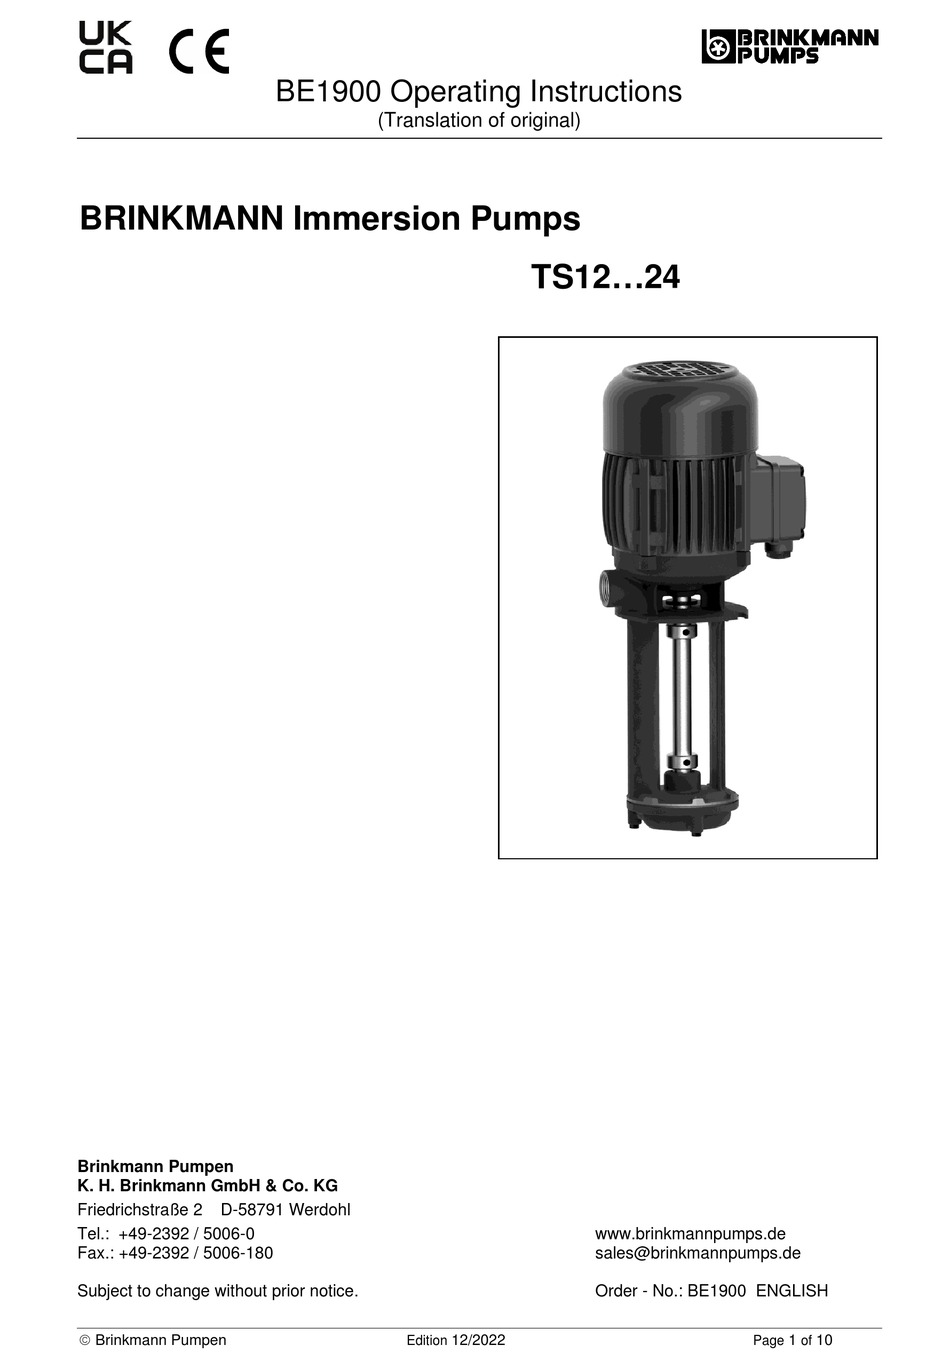 BRINKMANN PUMPS TS12 / 110 OPERATING INSTRUCTIONS MANUAL Pdf Download ...